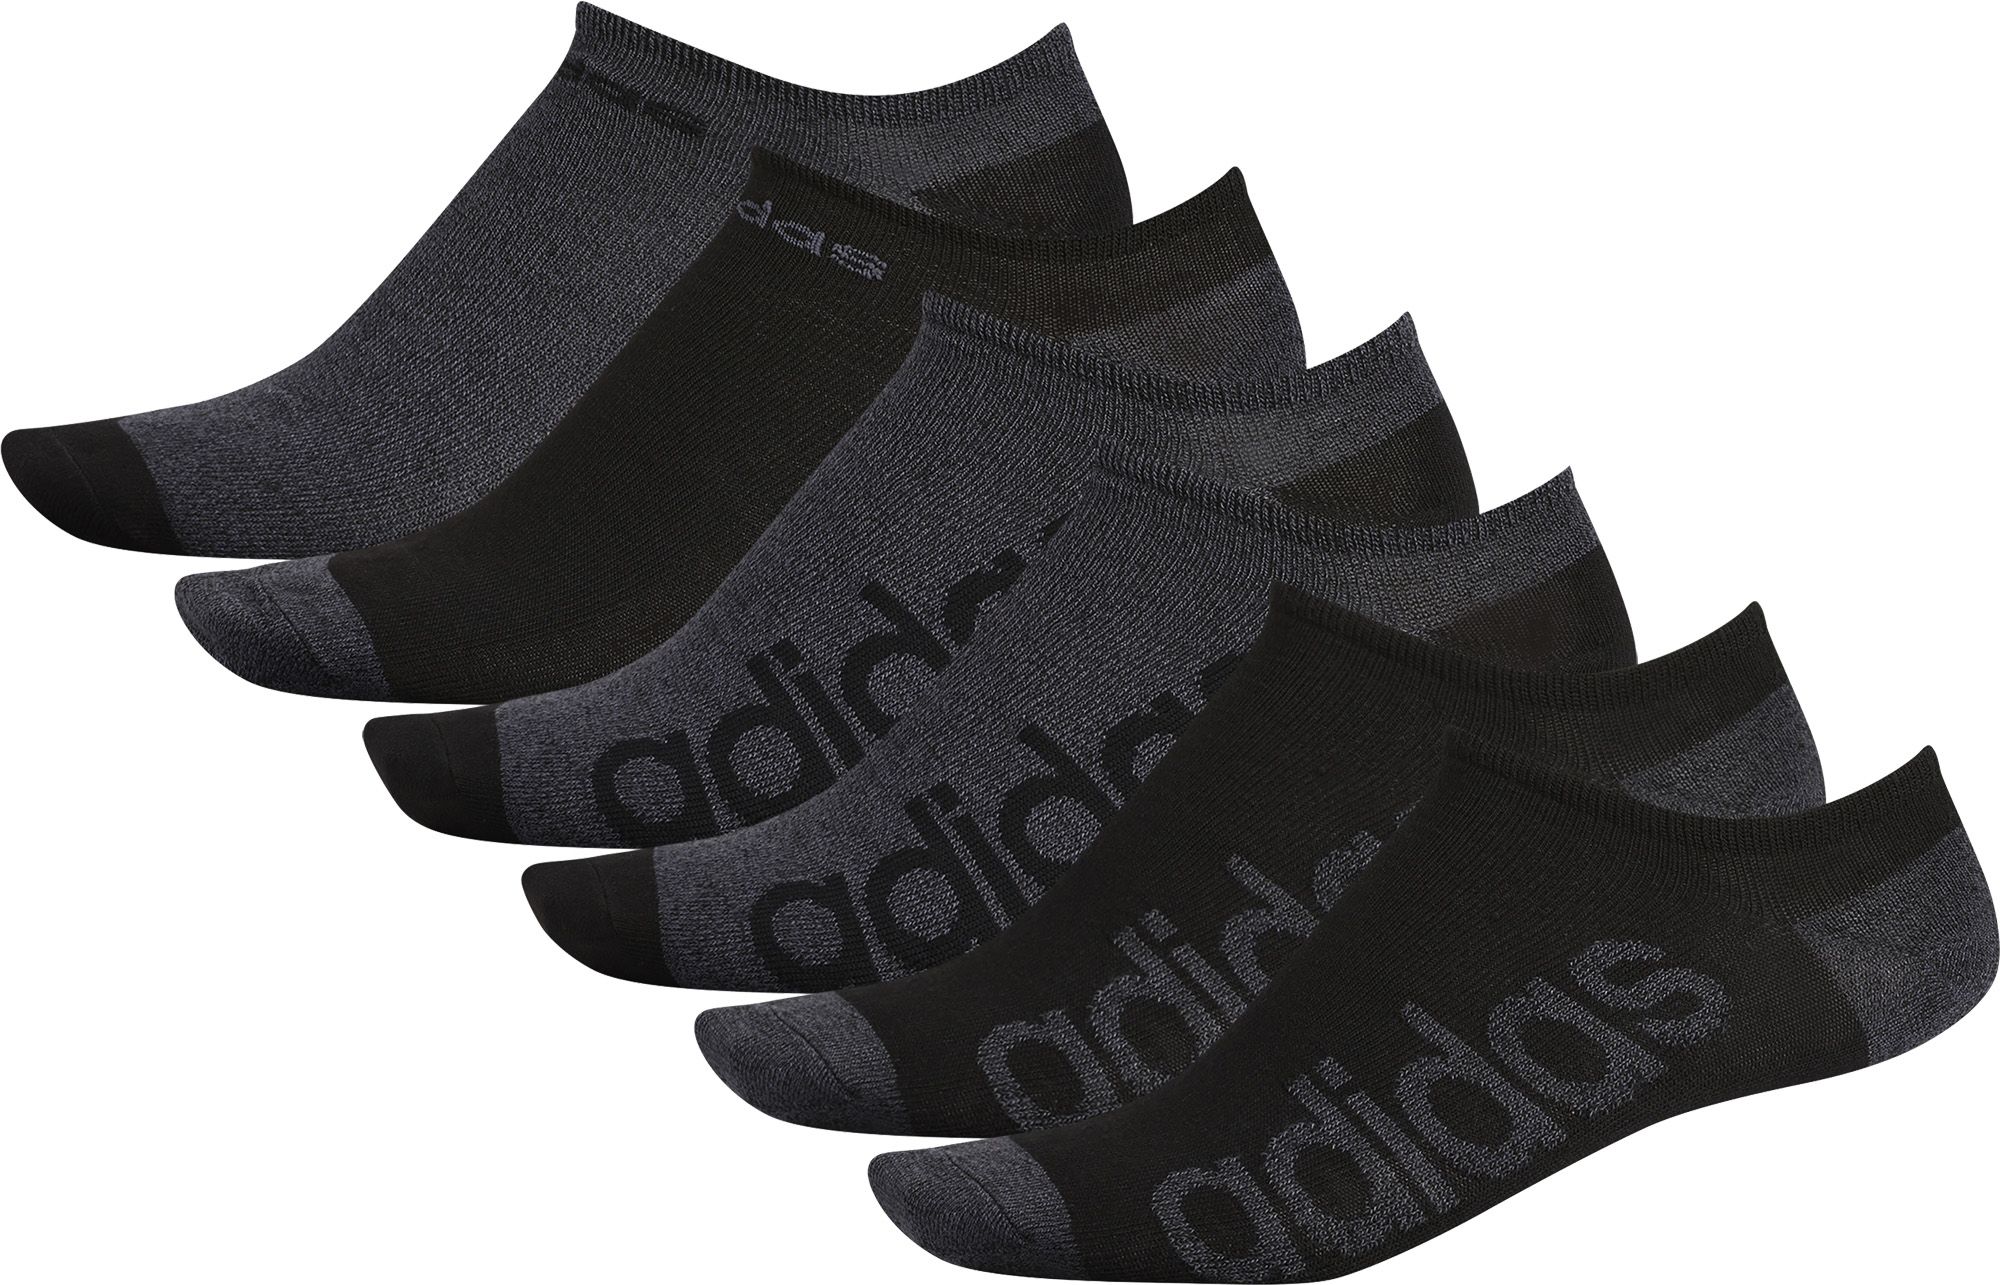 Superlite Linear No-Show Socks - 6 Pack 